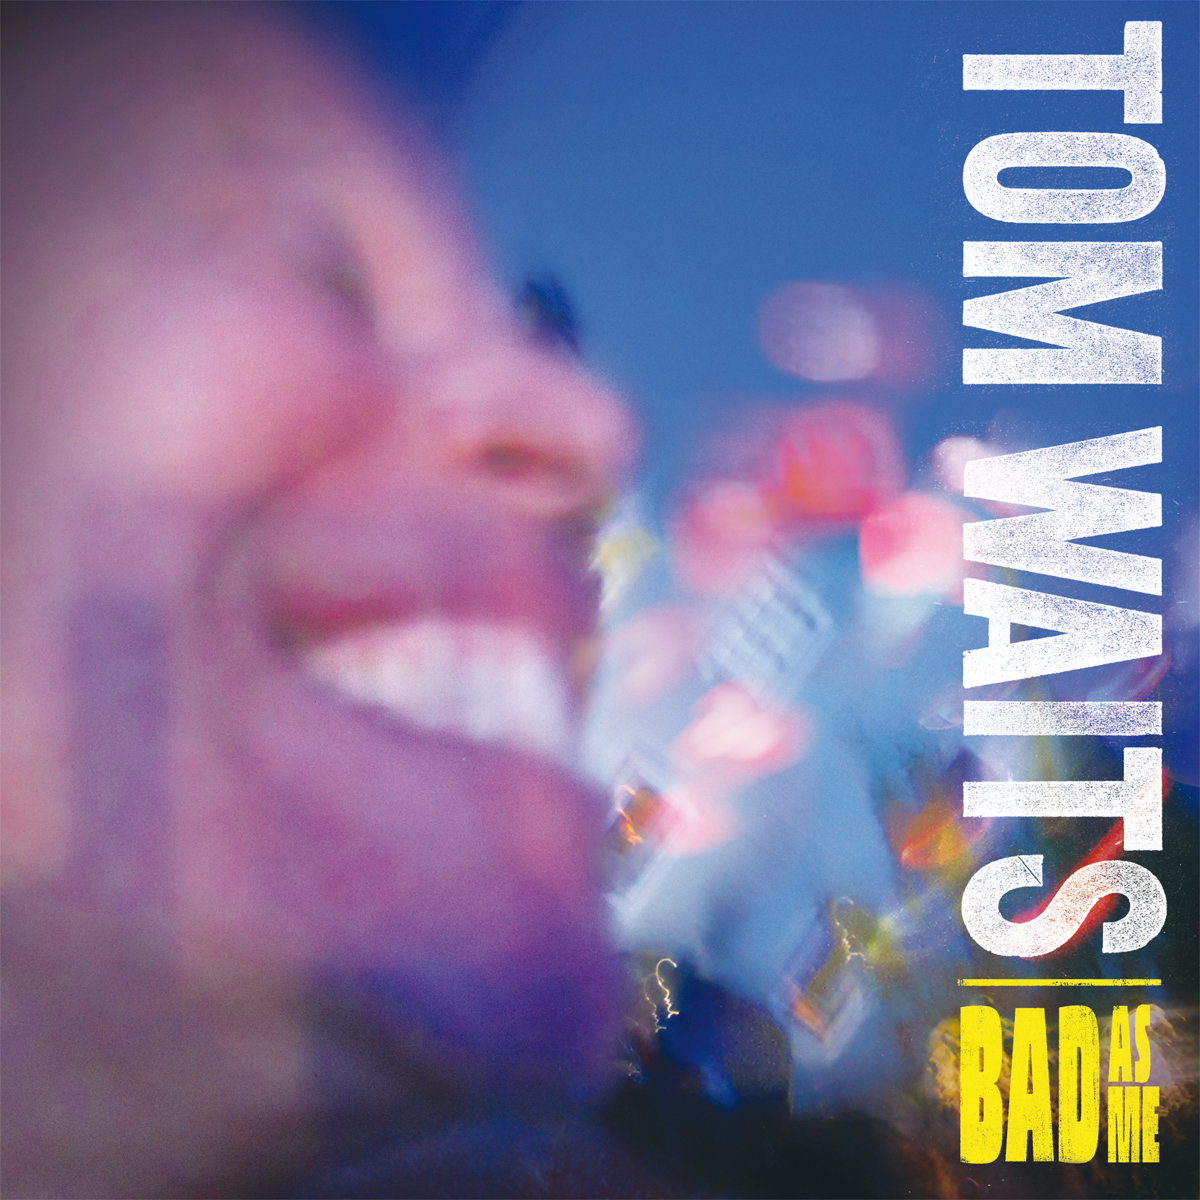 Tom Waits - Bad As Me - CD